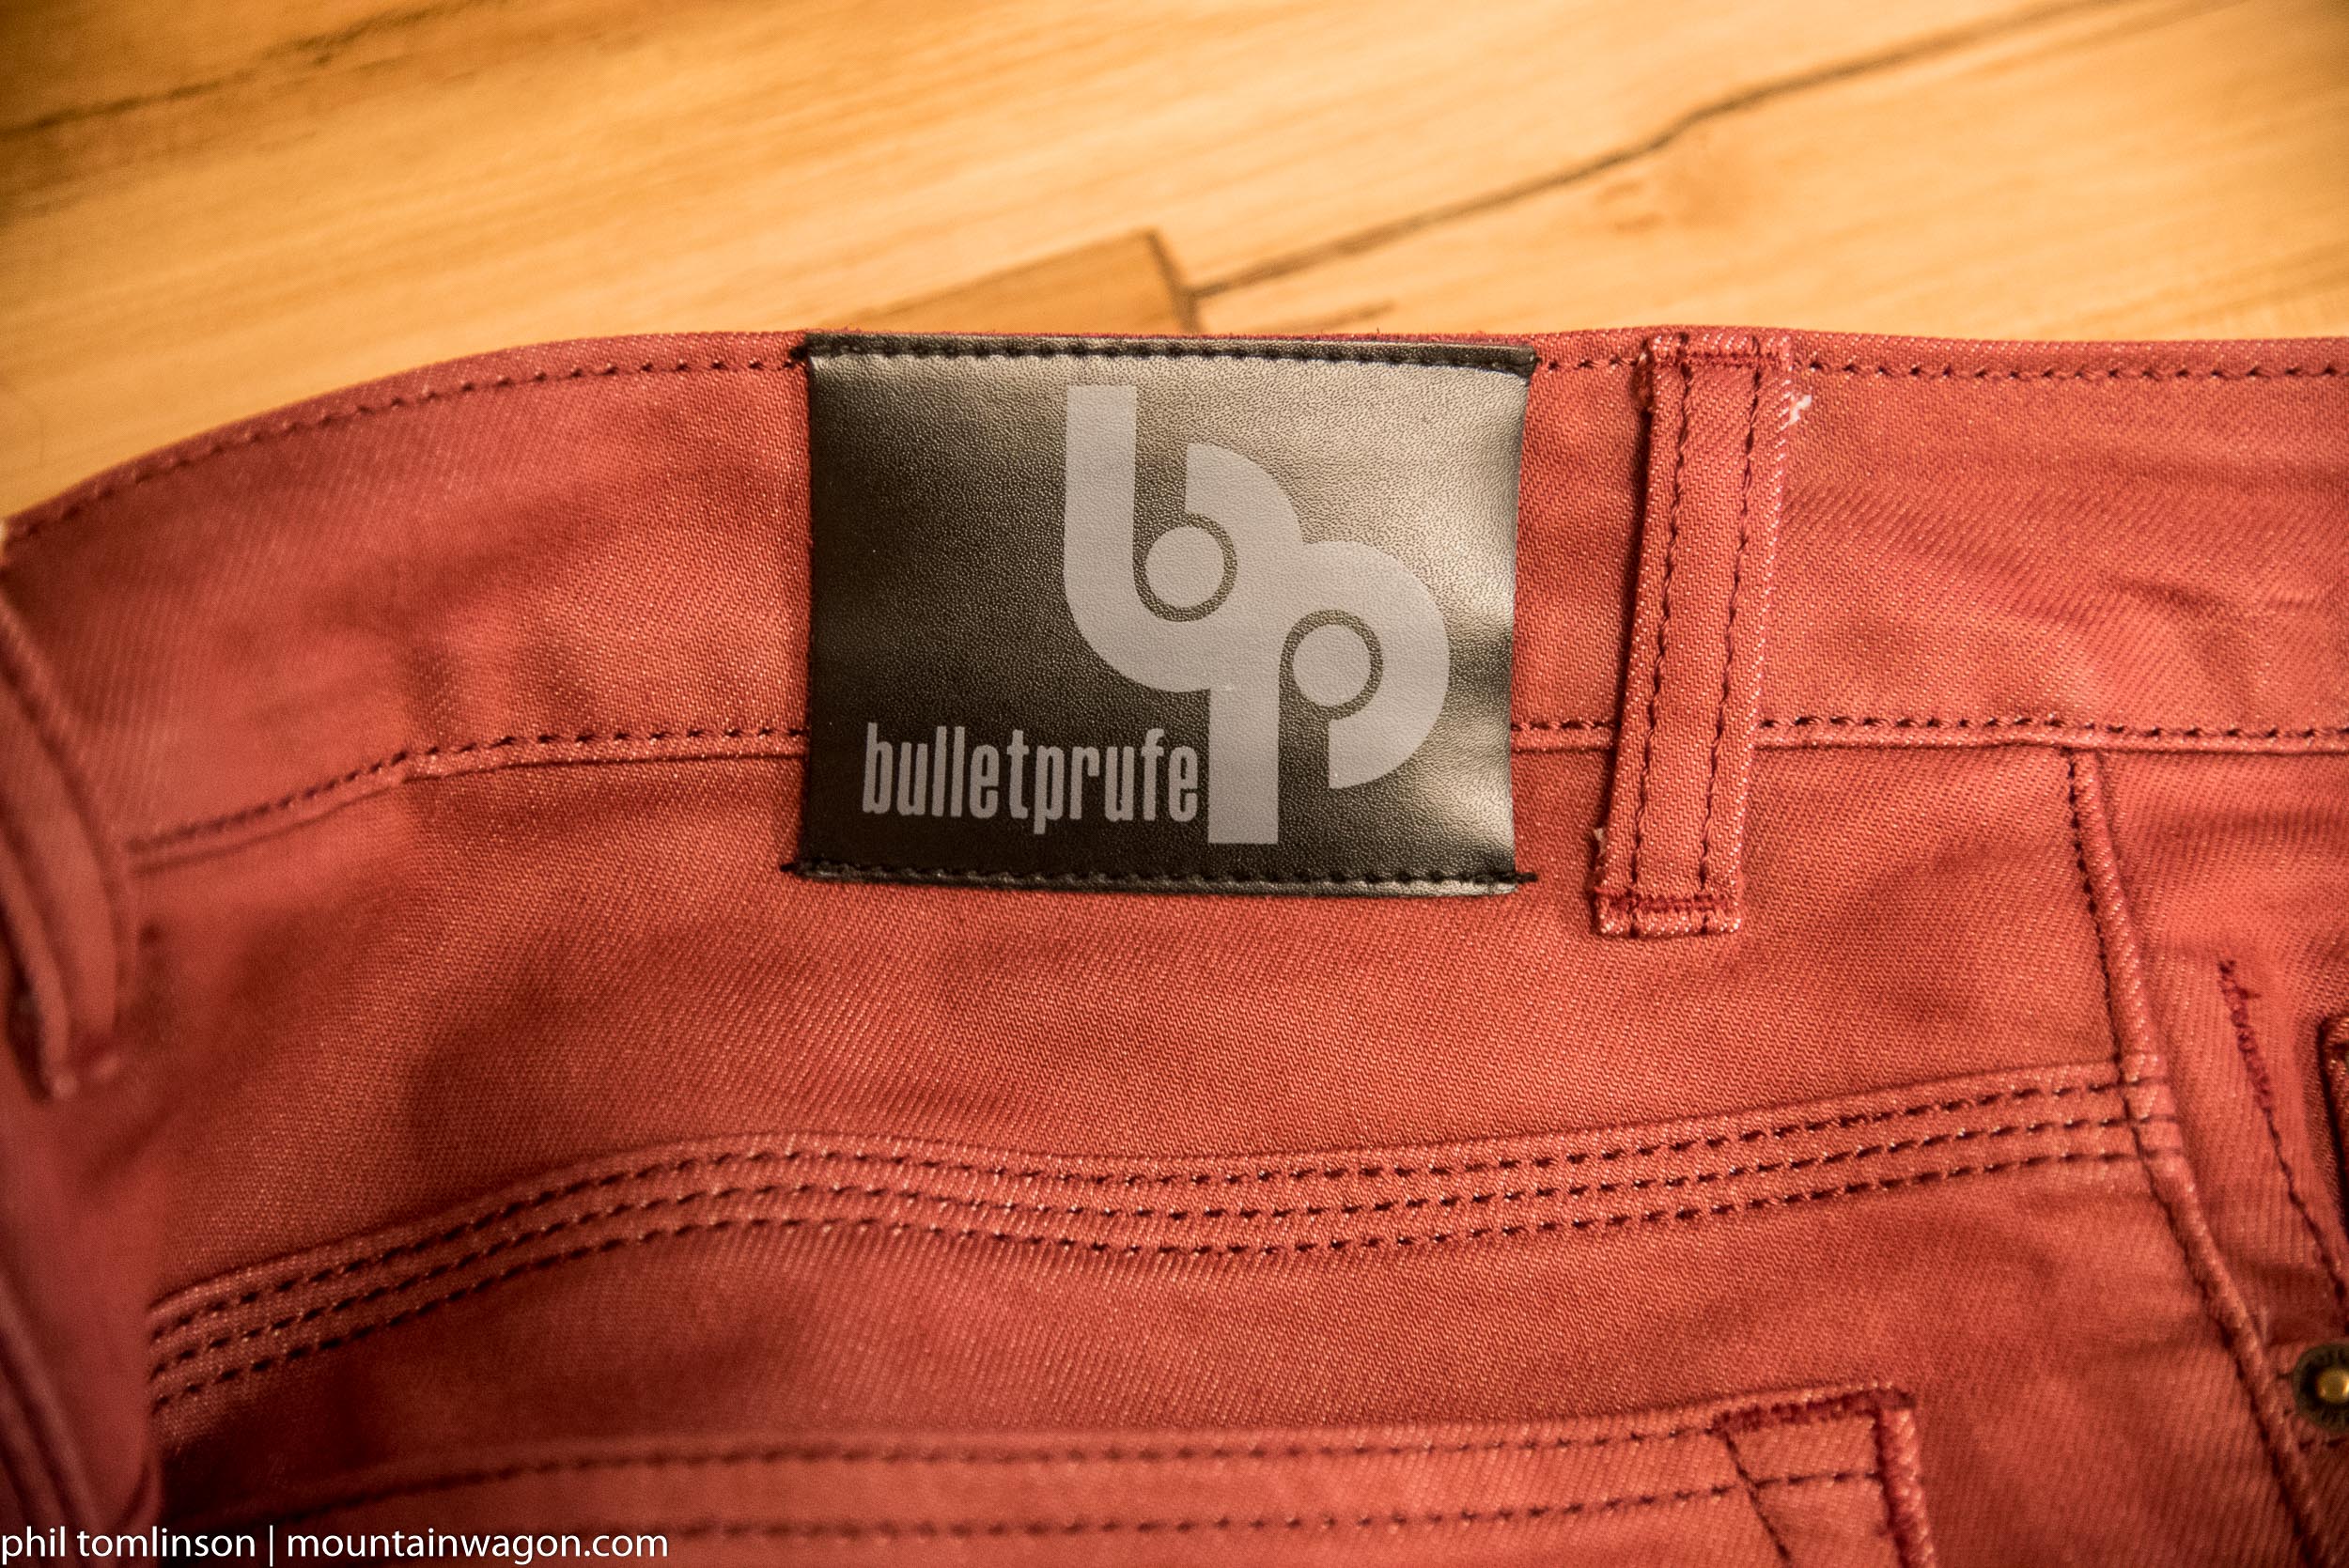 Bullet Prufe Jeans